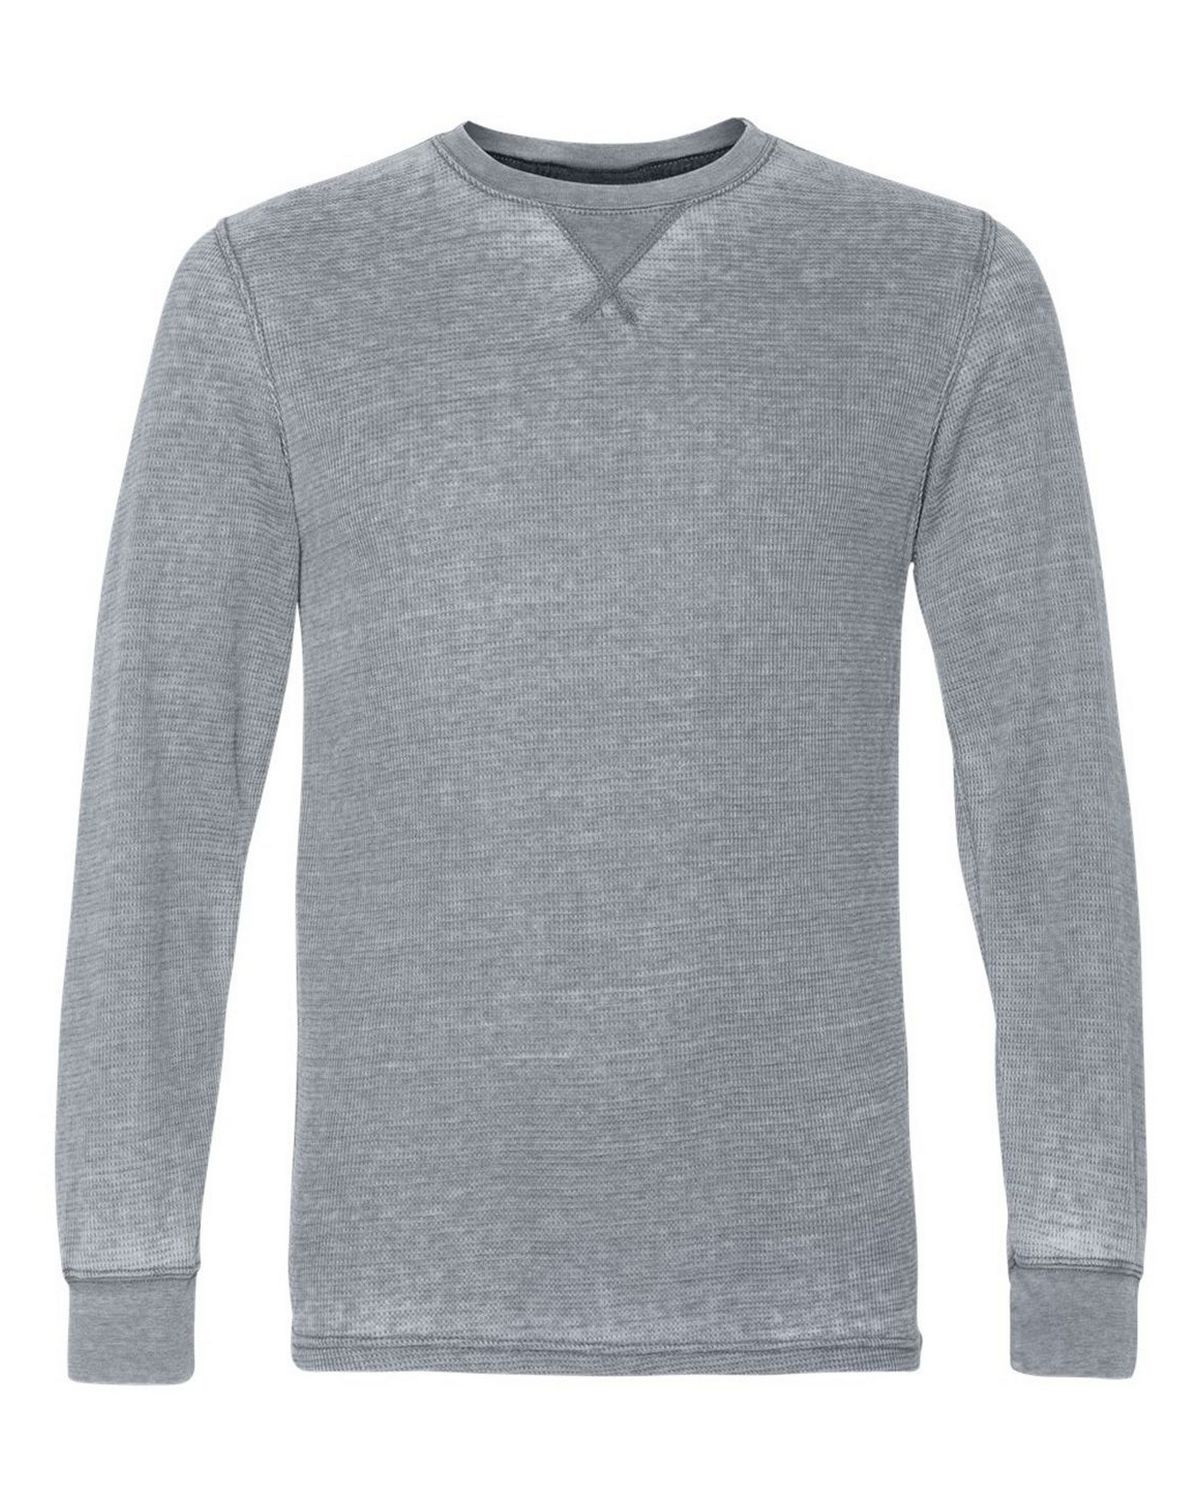 J America 8241 Men's Vintage Zen Thermal Long Sleeve T-Shirt - Cement - S #vintage